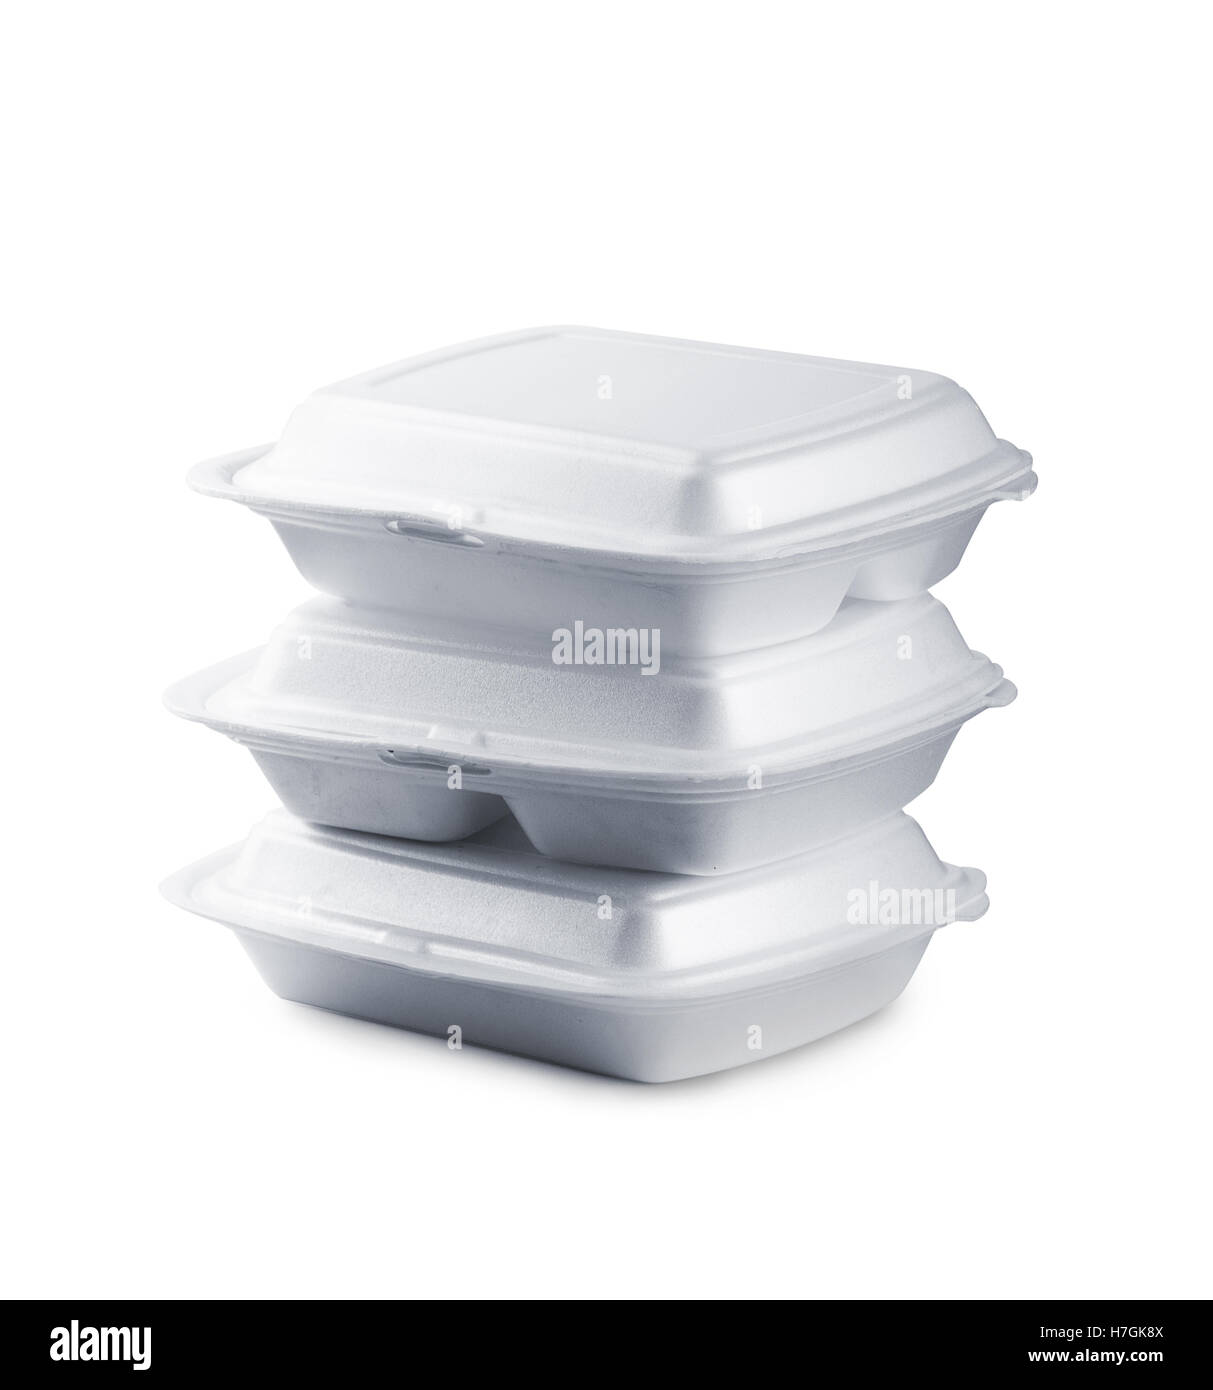 https://c8.alamy.com/comp/H7GK8X/styrofoam-meal-boxes-isolated-on-white-background-H7GK8X.jpg